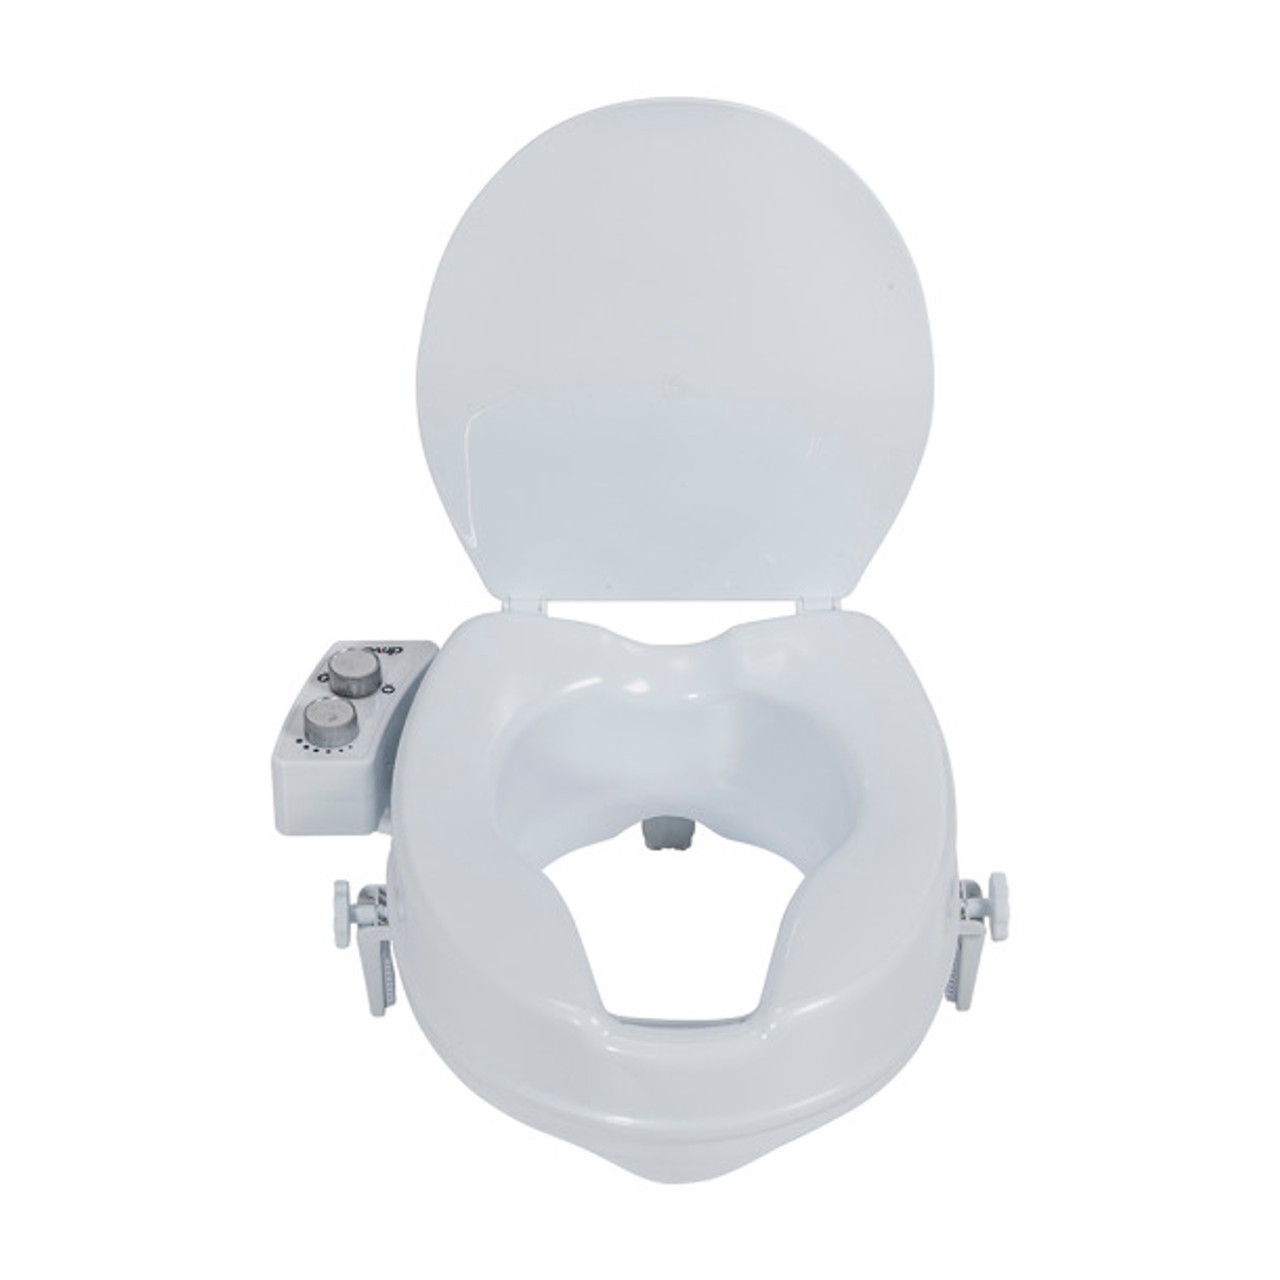 PreserveTech™ Raised Toilet Seat with Bidet - Ambient